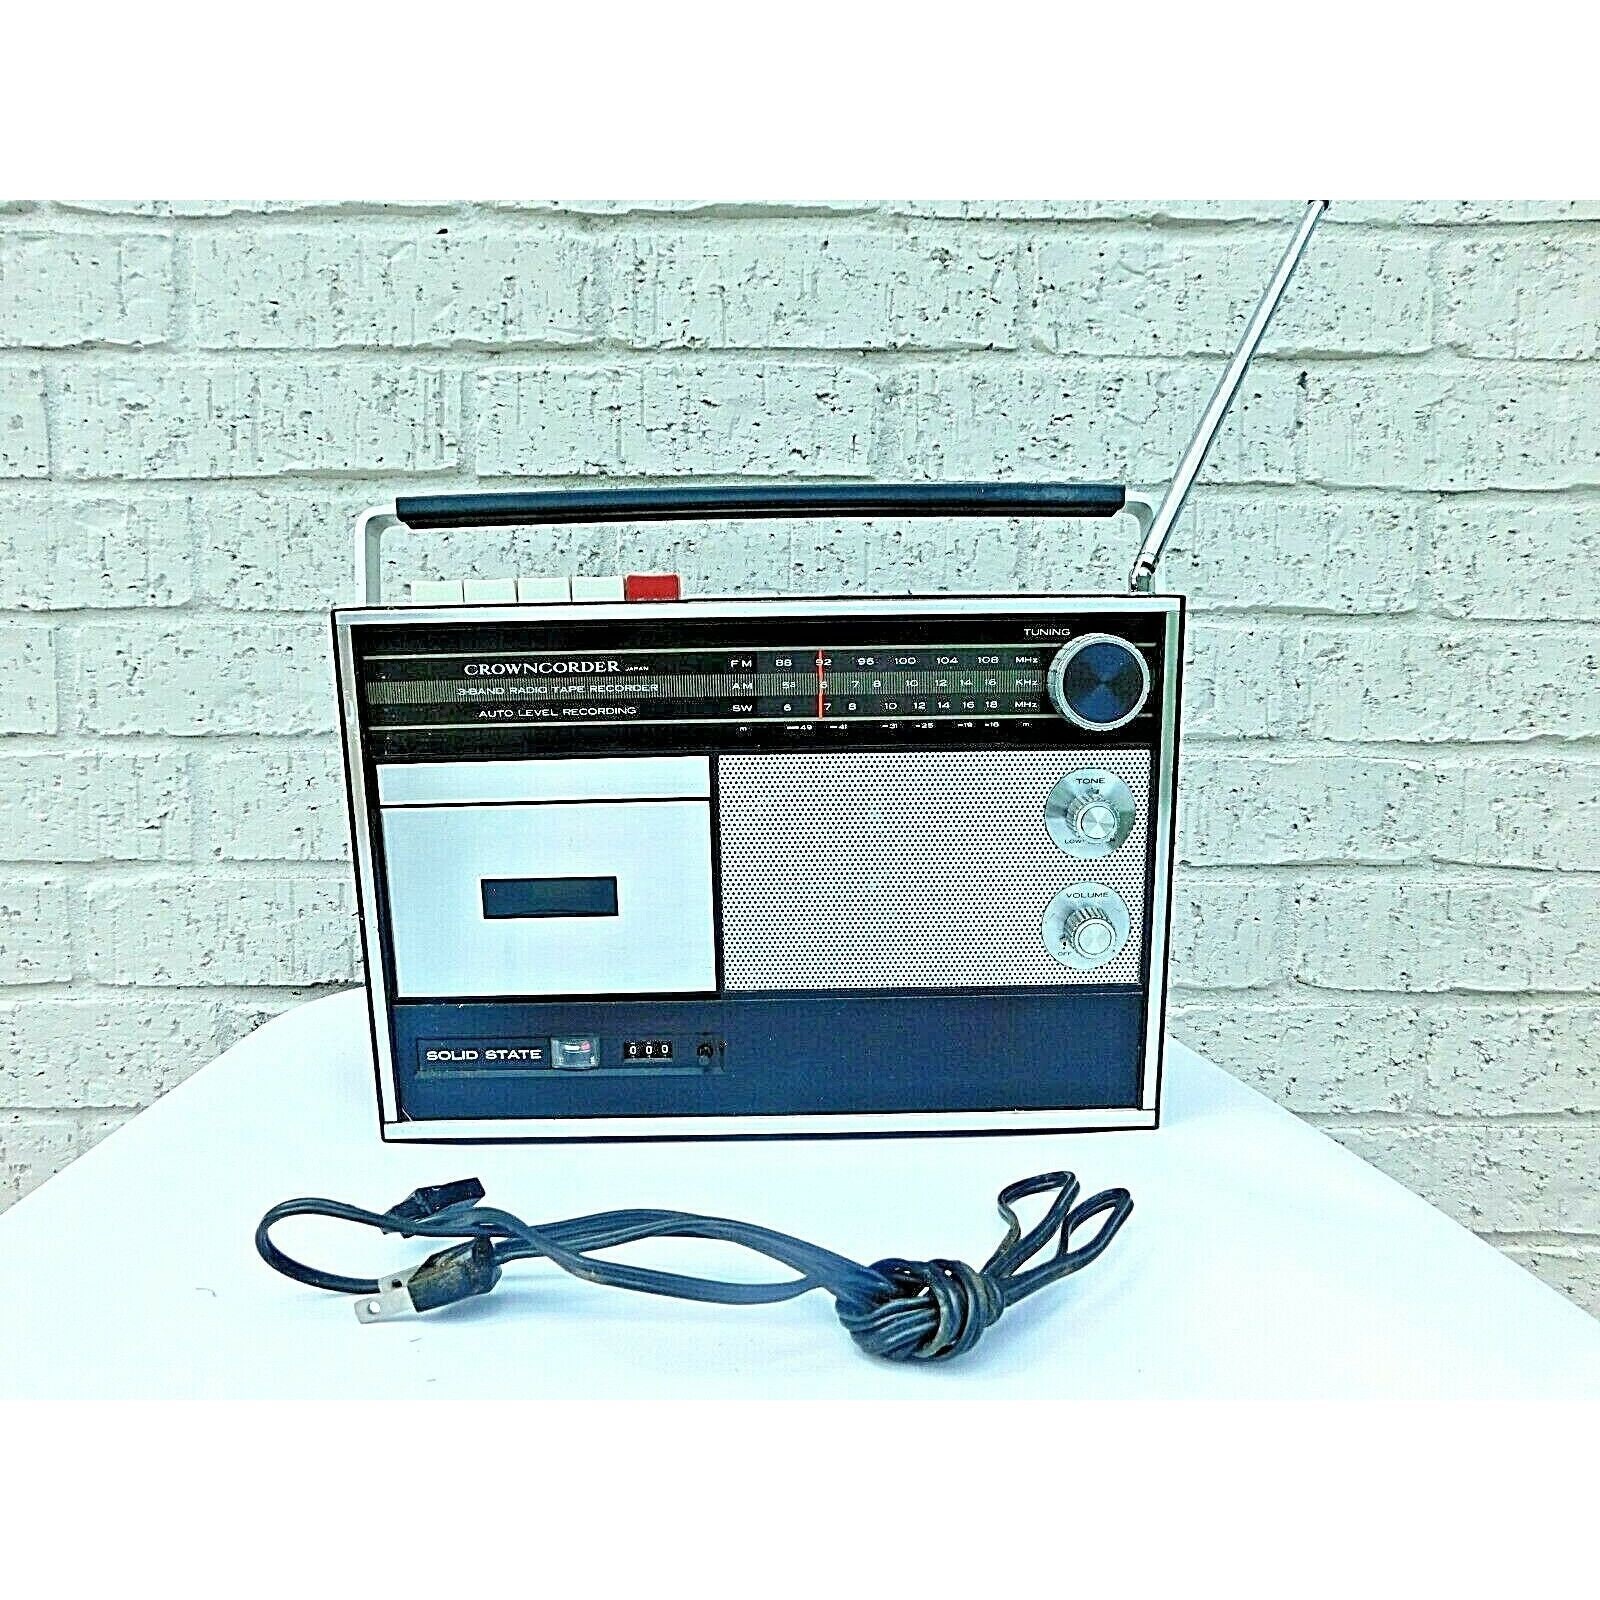 Rare Vintage Crowncorder Band Radio Tape Recorder Solid Etsy 日本